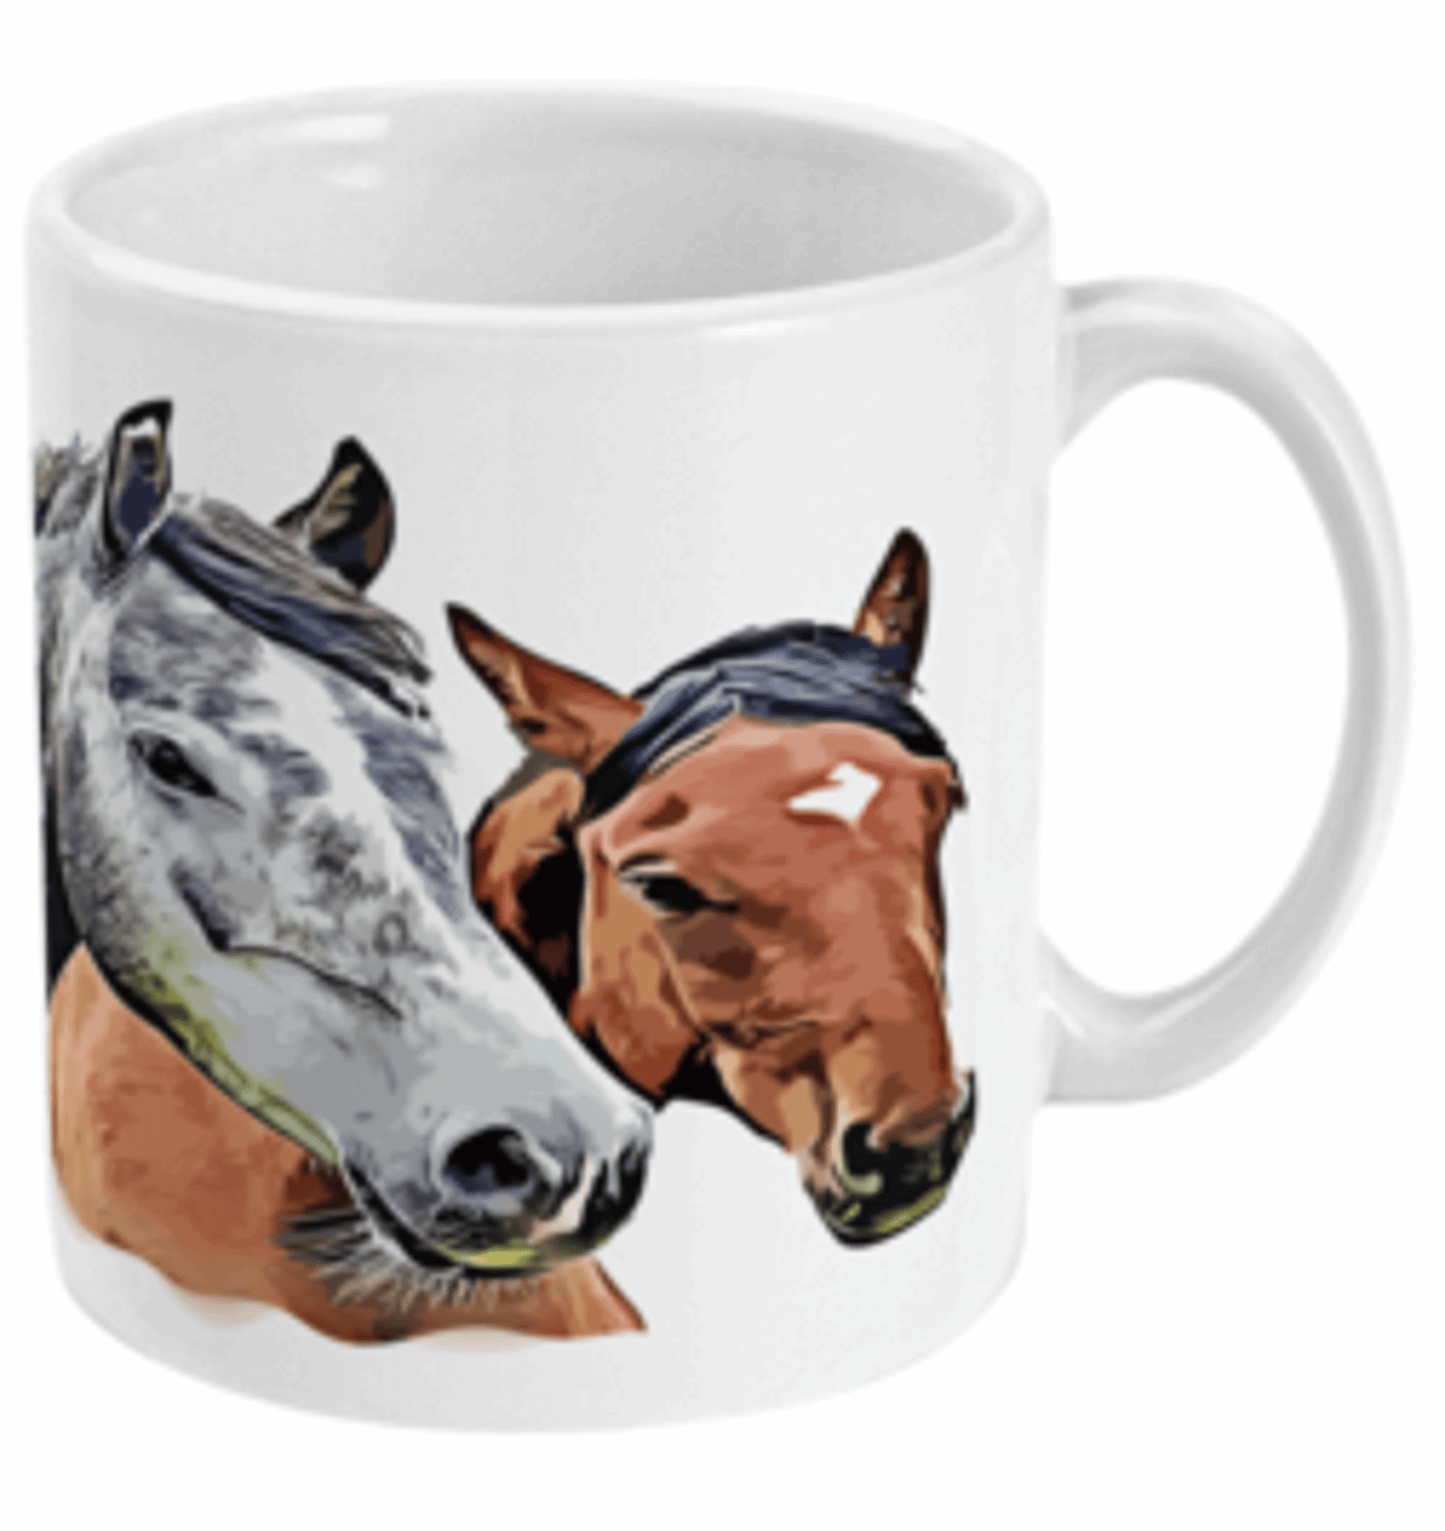  Three Beautiful Horses Coffee or Tea Mug by Free Spirit Accessories sold by Free Spirit Accessories